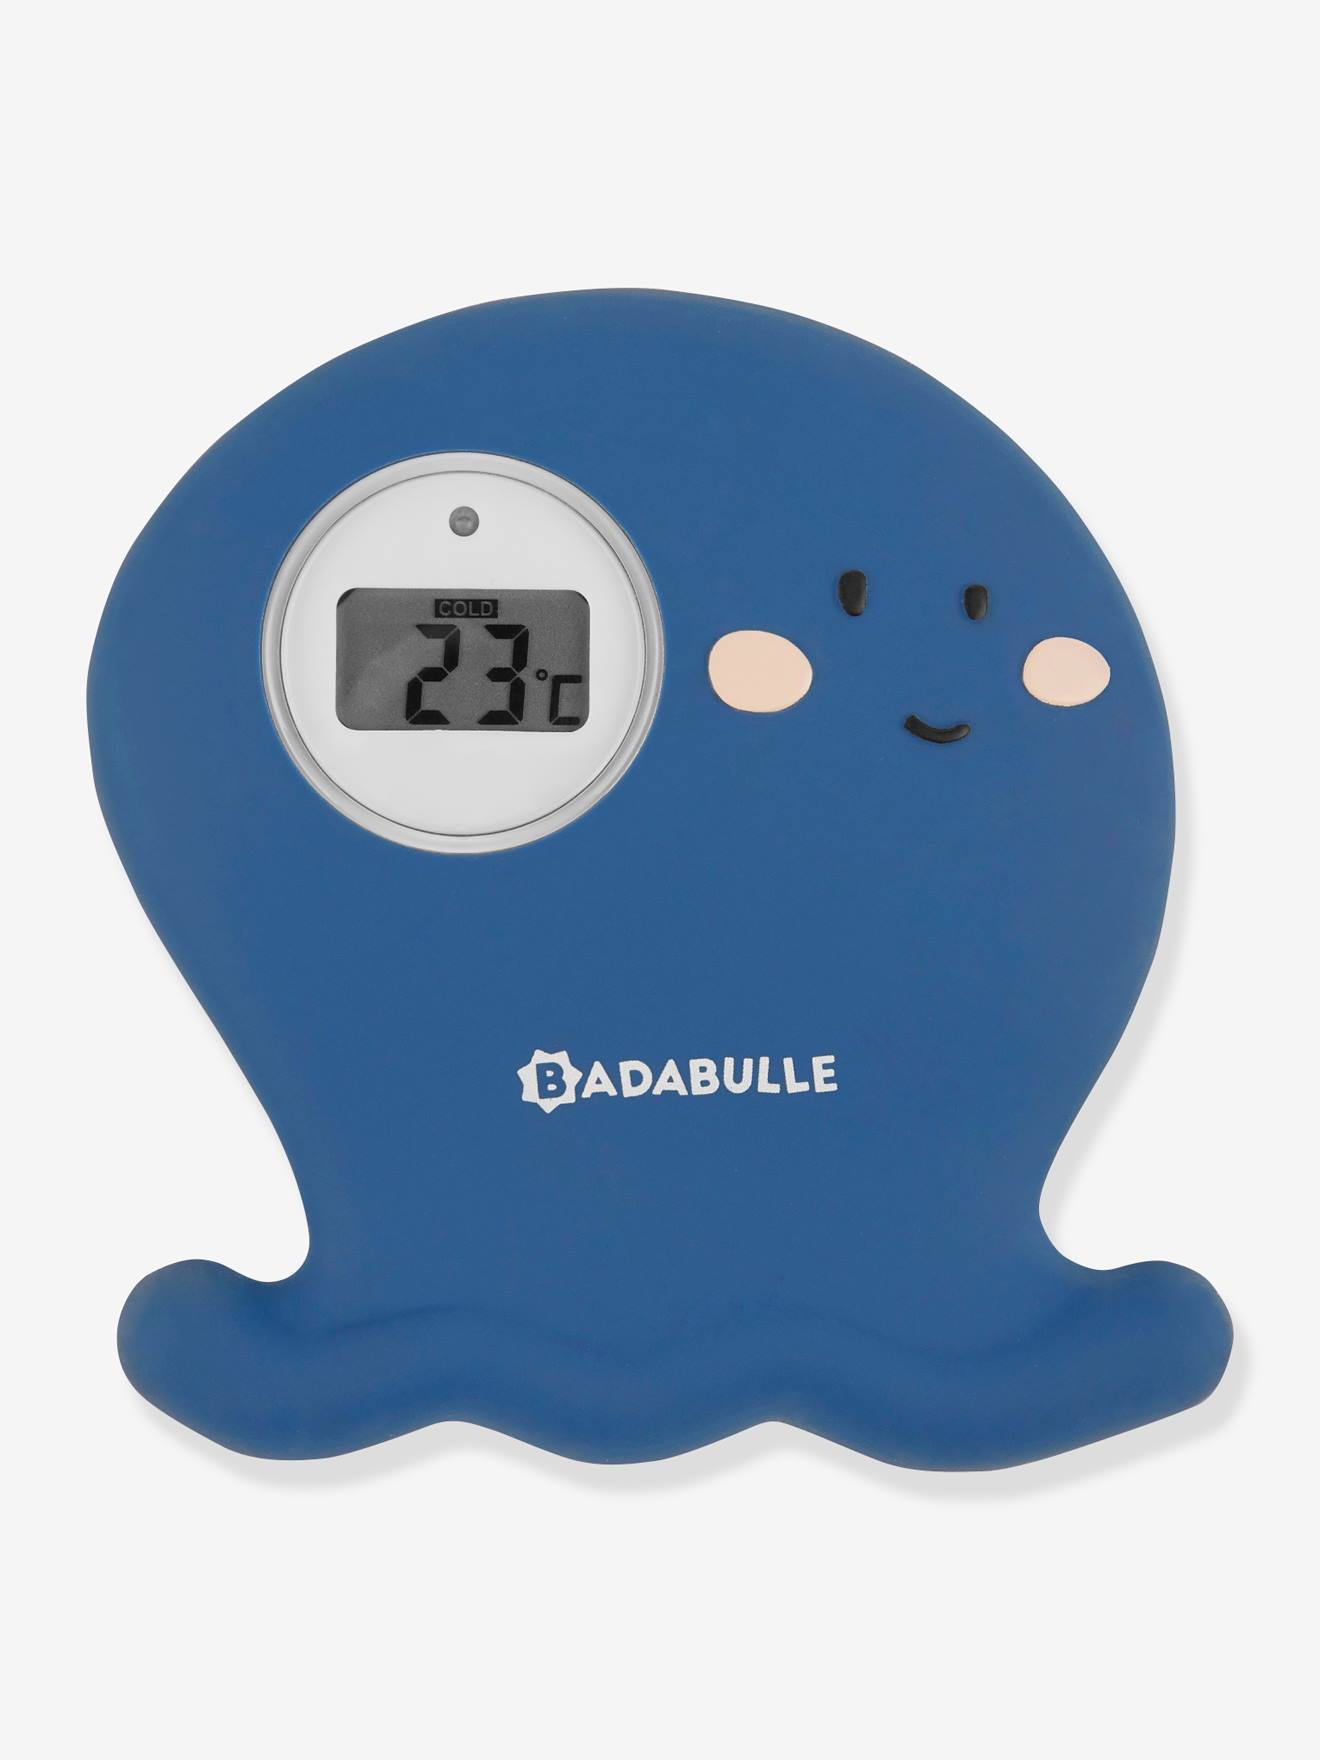 Octopus Bath & Room blue Thermometer, | BADABULLE - solid, Vertbaudet by Nursery medium